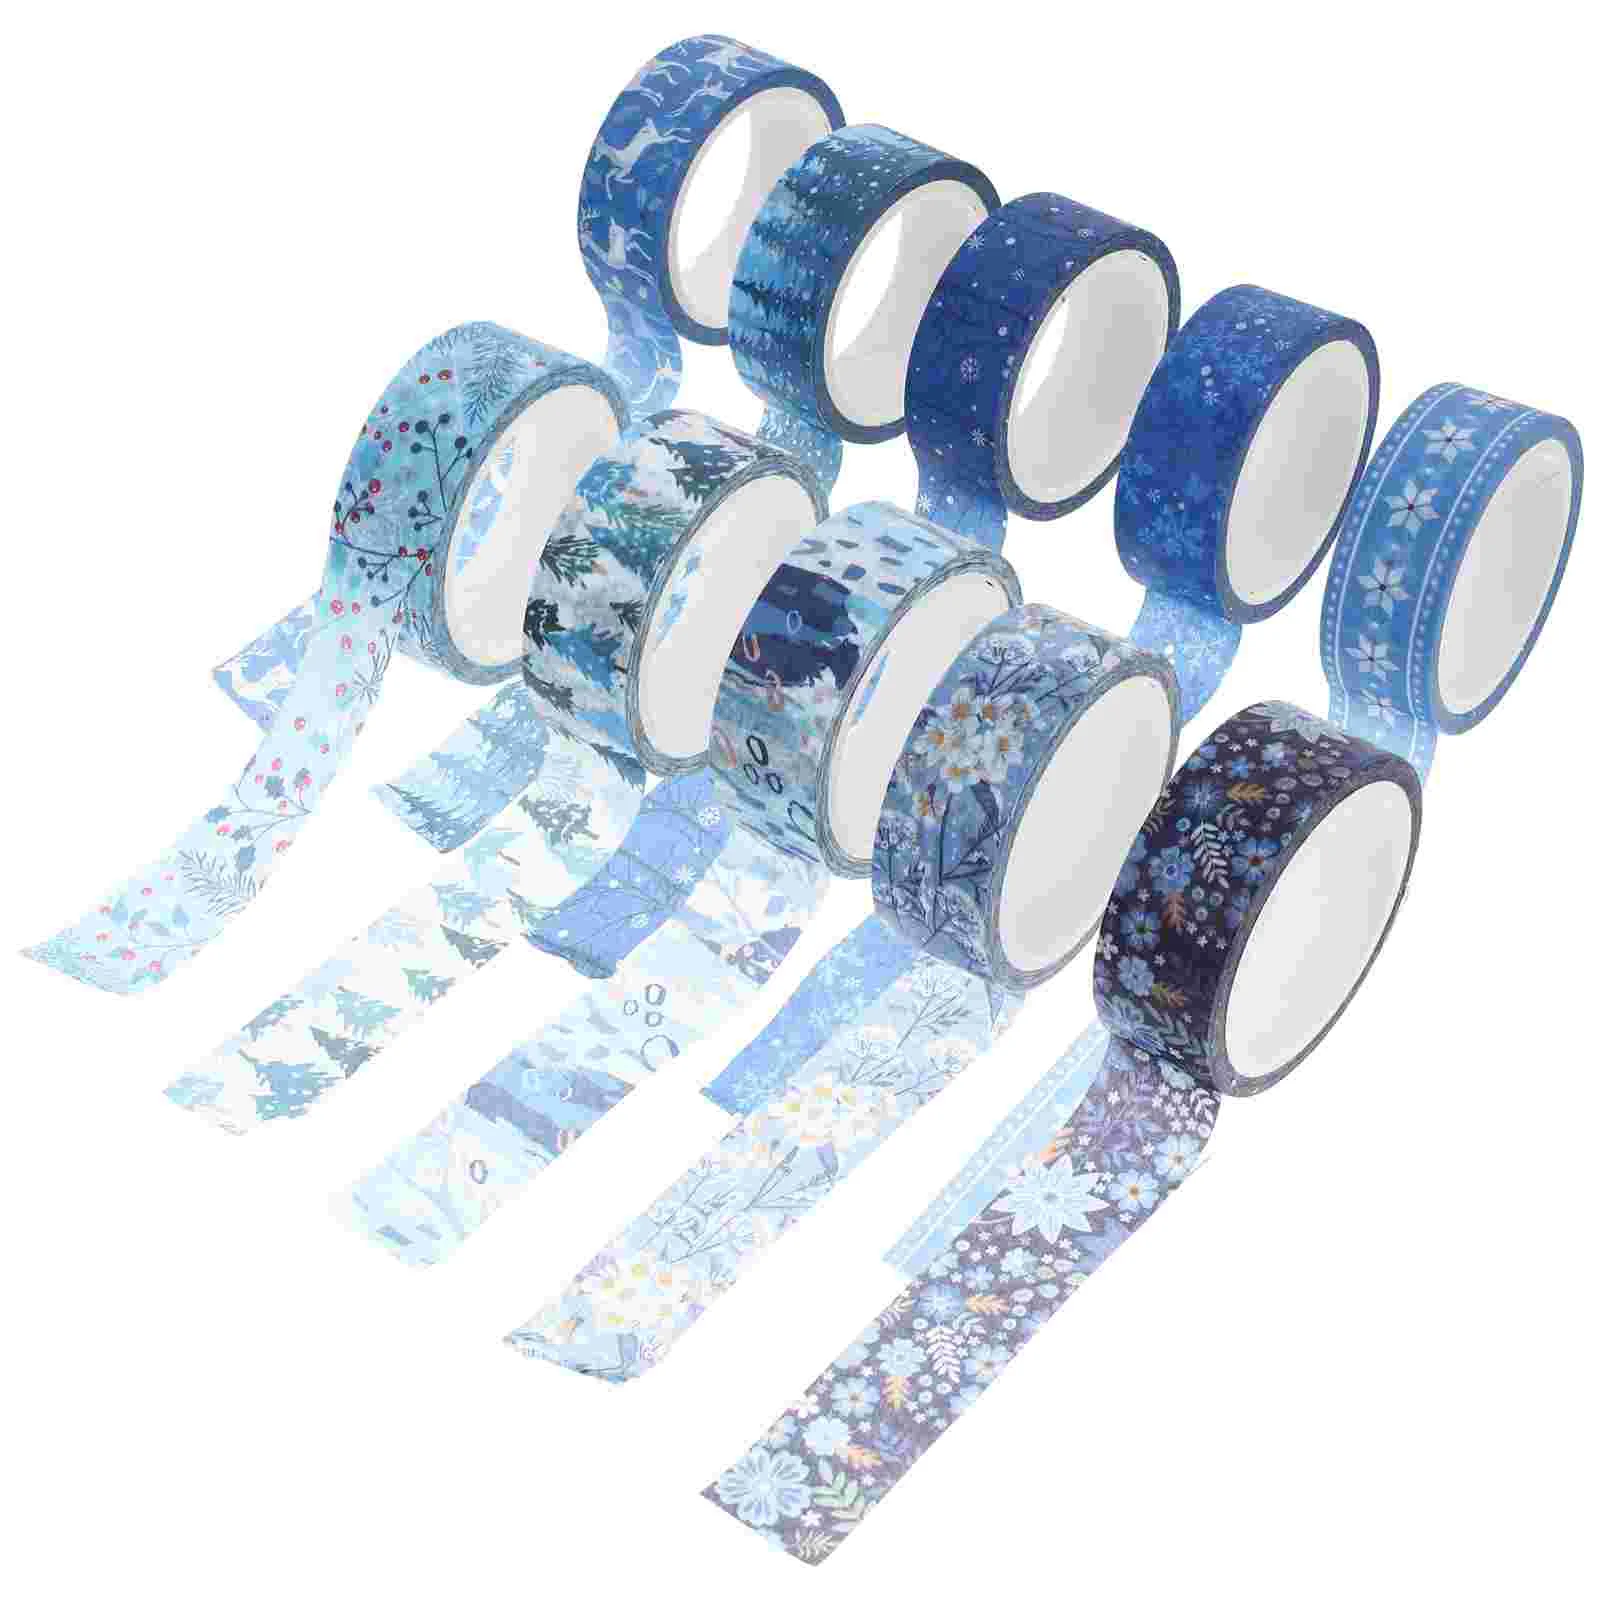 

10 Rolls of Crafting Tape Scrapbooking Tape DIY Washi Tape Xmas Themed Washi Tape Winter Season Tape